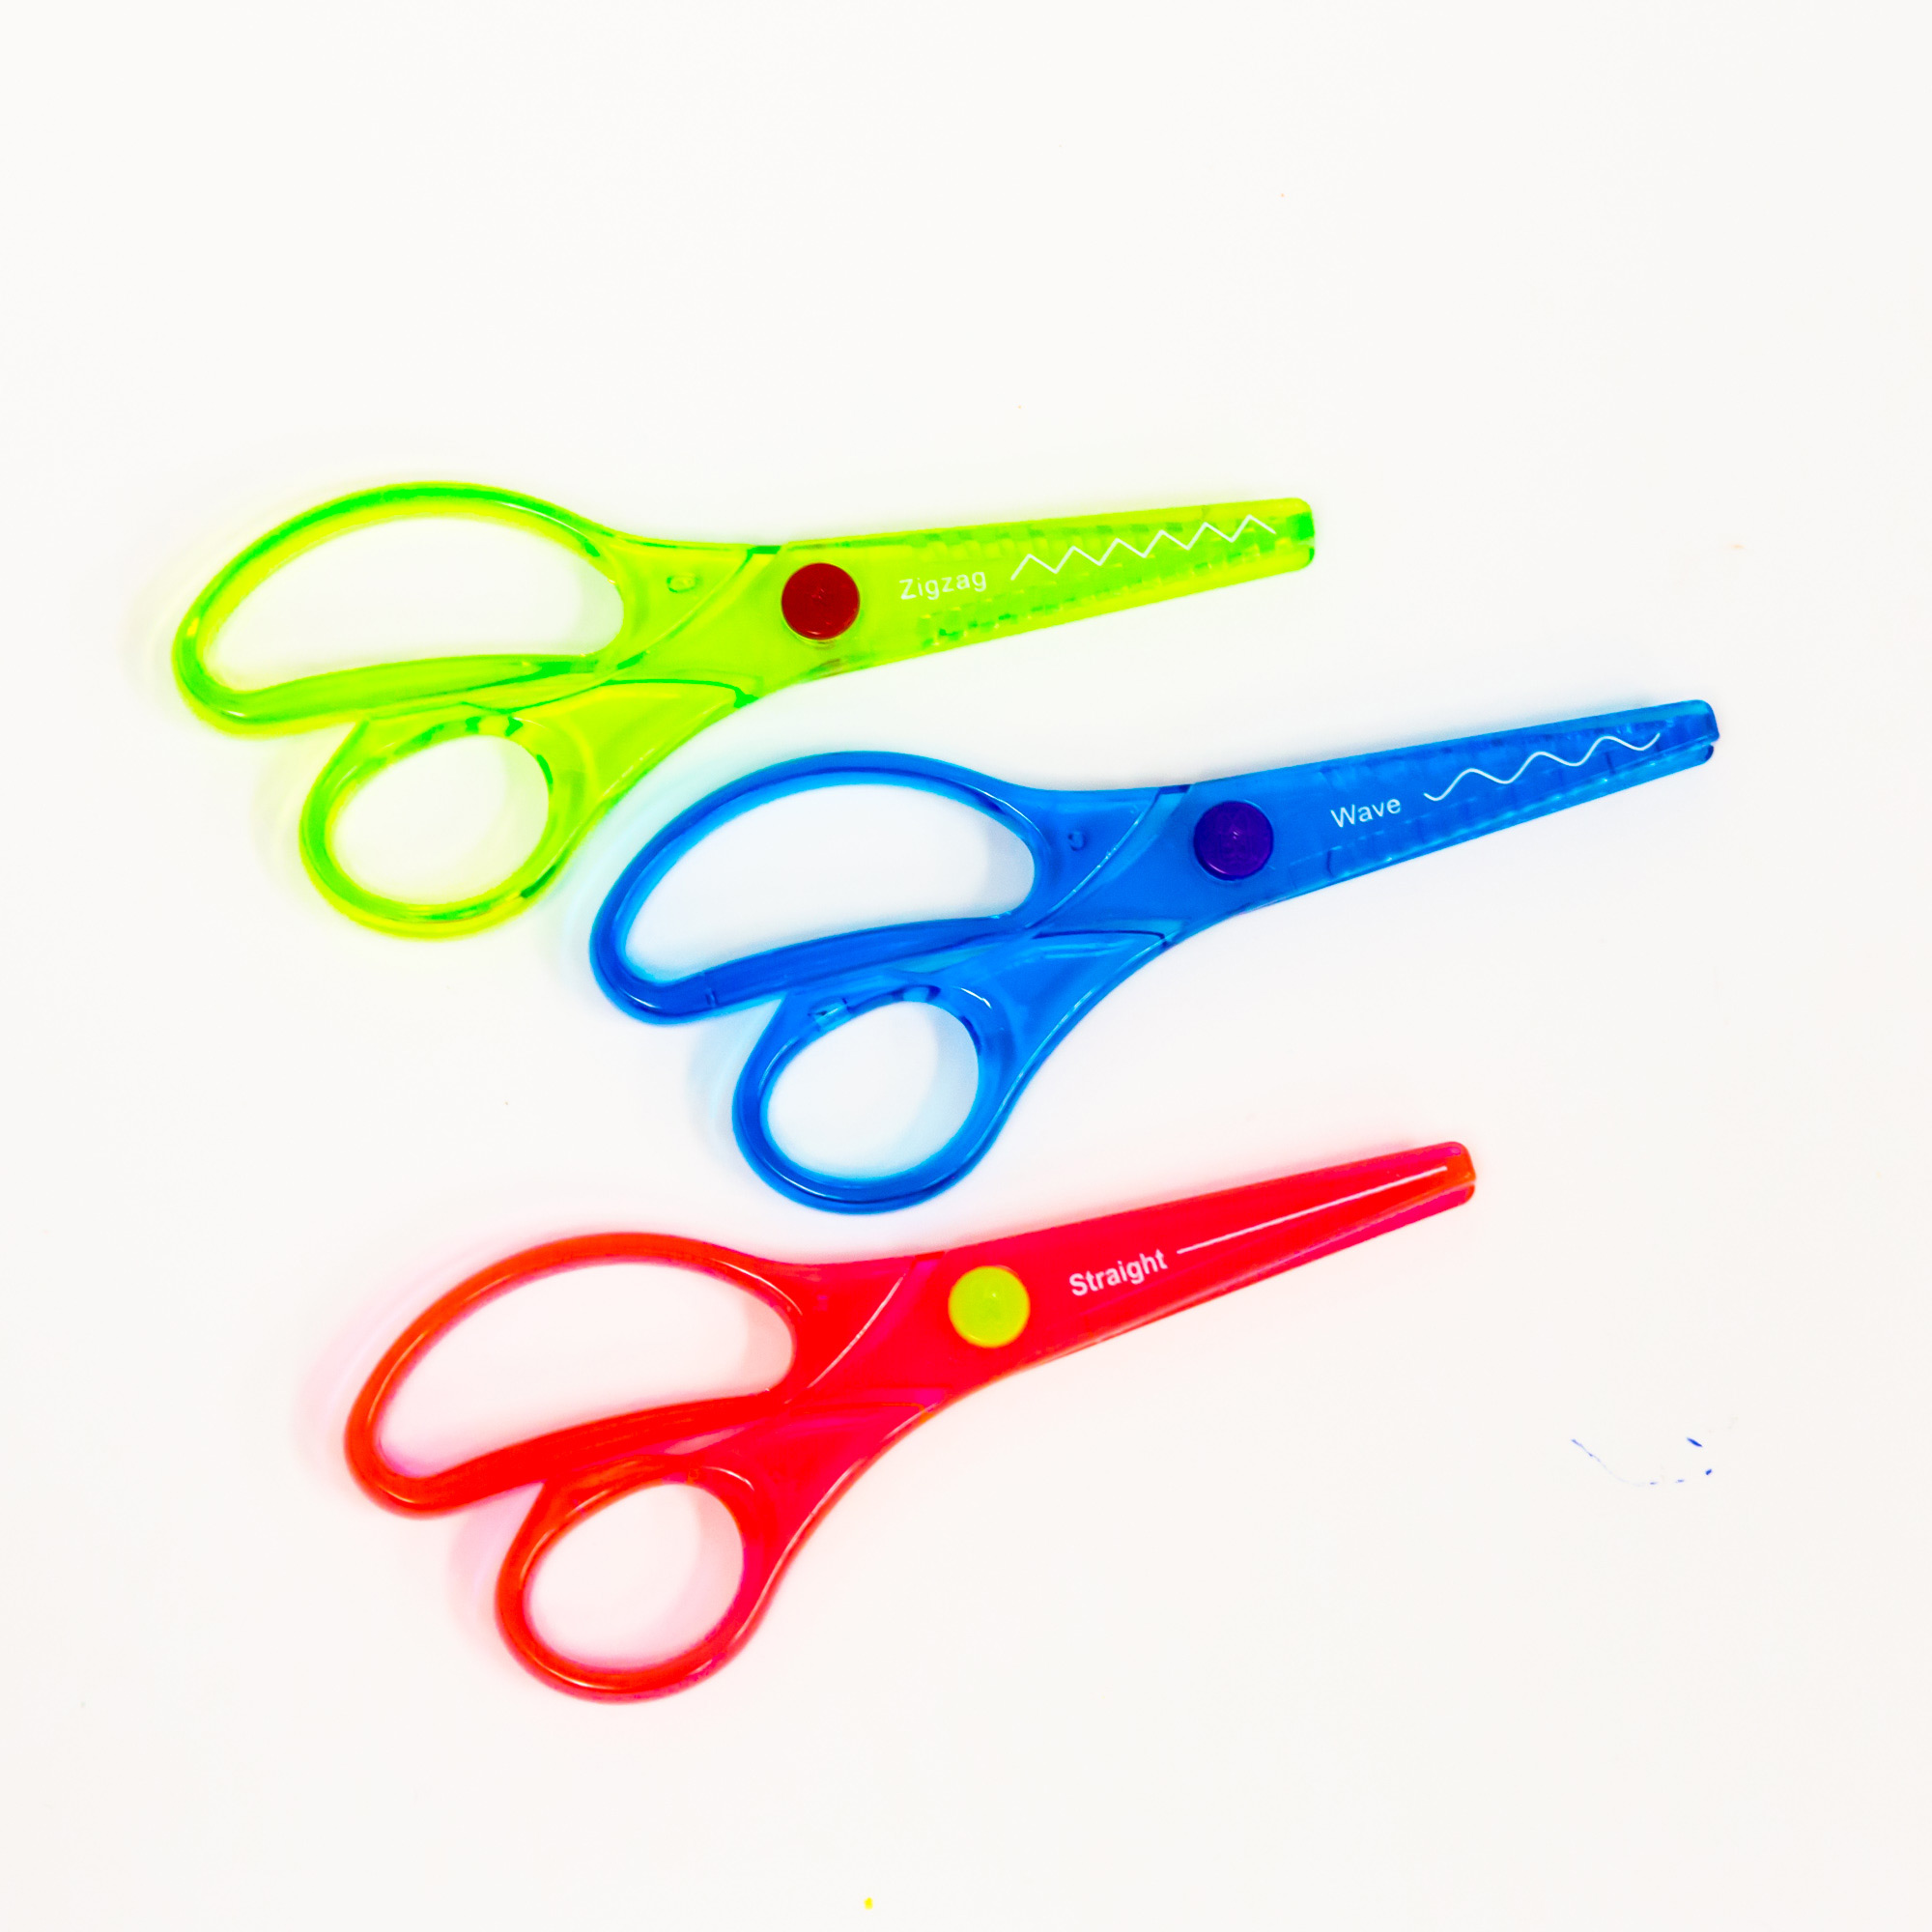 Pack of 2 New Crazy Scissors 5Zig Zag Crazy Edge Scissors For Young Kids